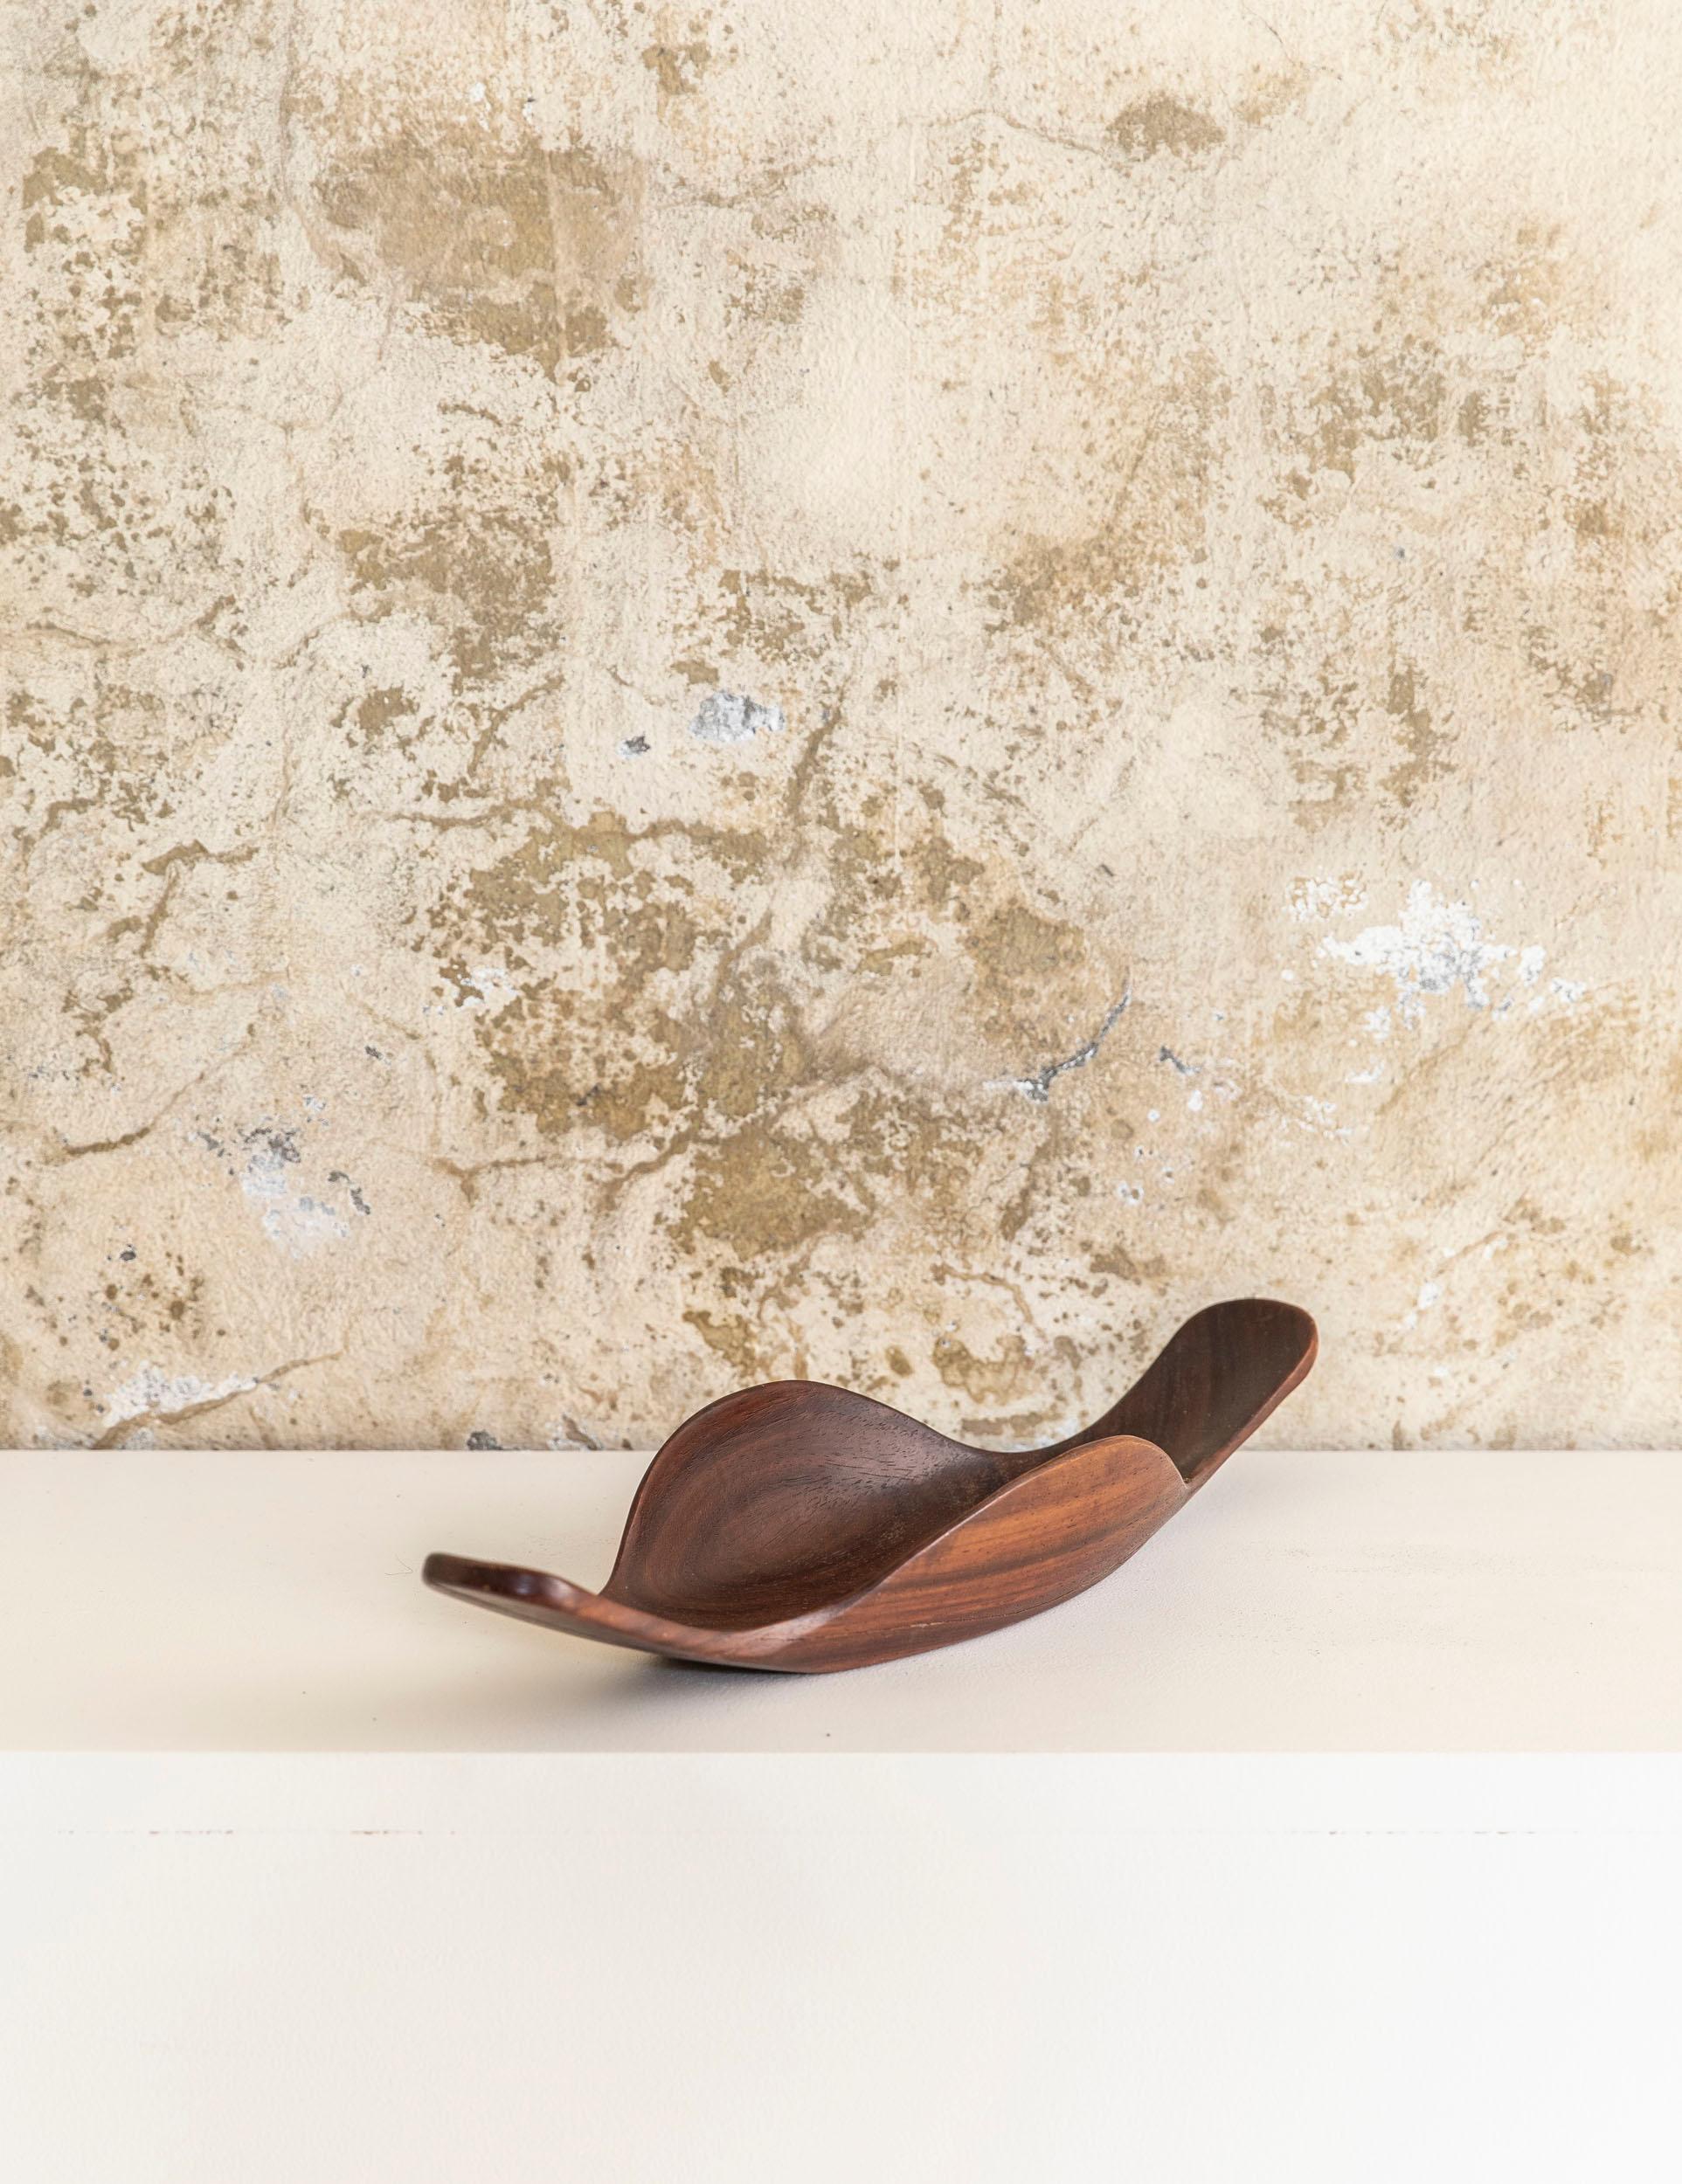 Charming Italian teak wood centerpiece by Anri Form, original copper mark.